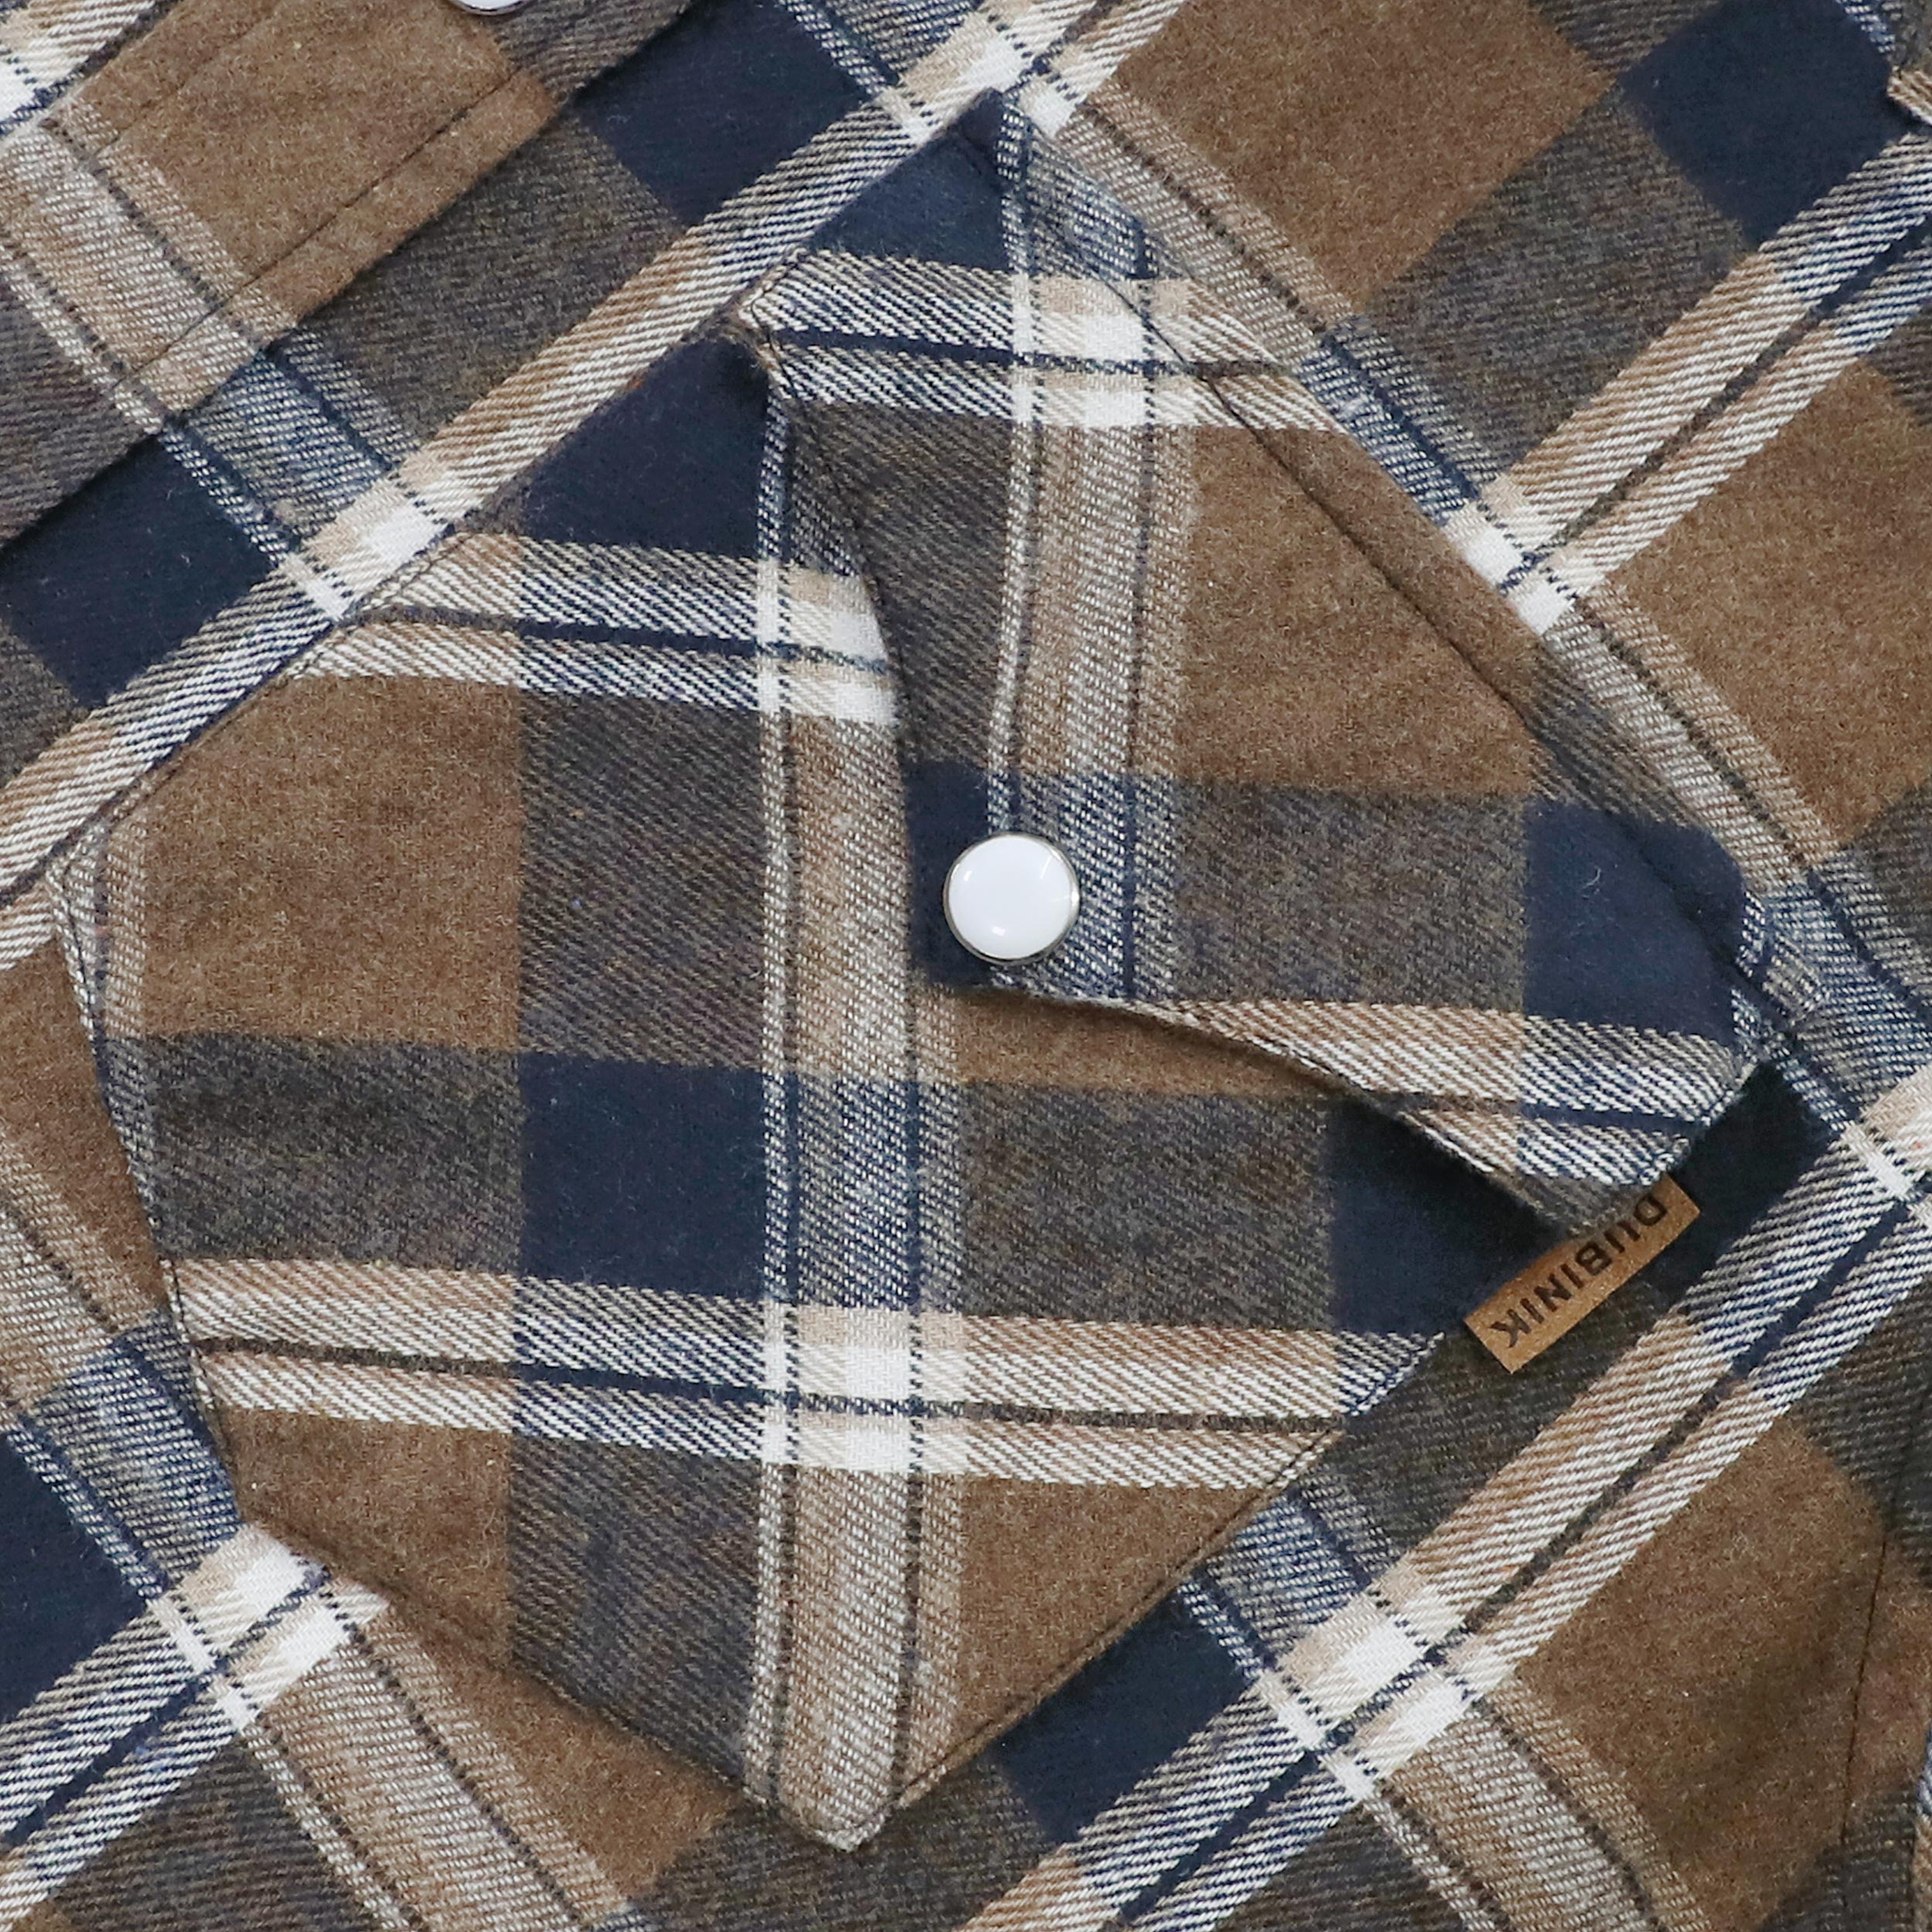 Dubinik® Flannel Shirt For Men Western Cowboy Pearl Snap Shirts For Men Long Sleeve Vintage Buttons Down Plaid Shirt #28902